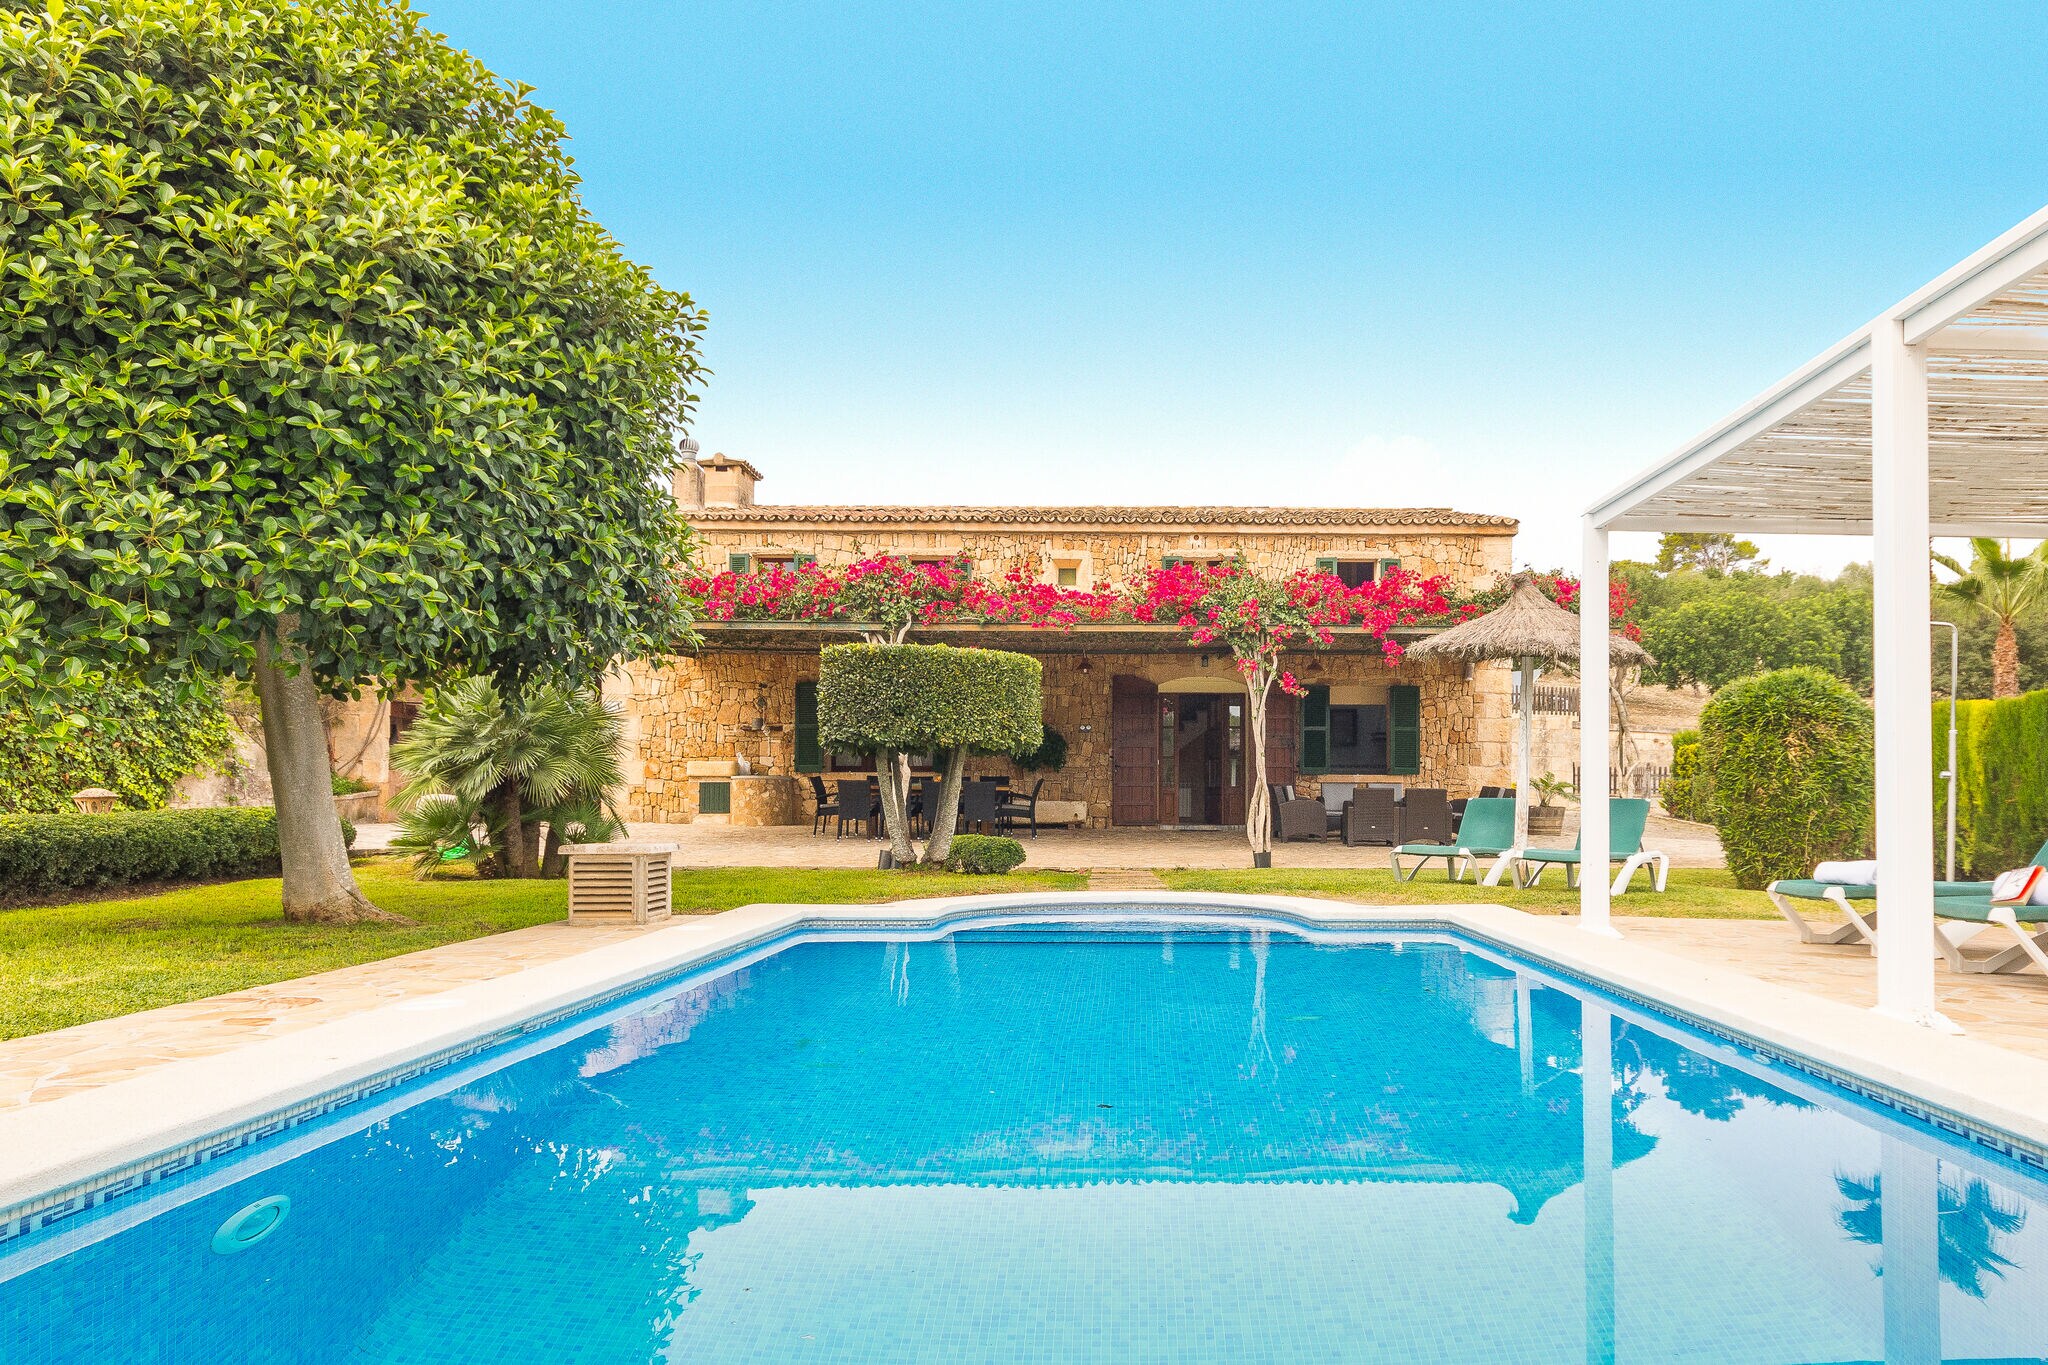 Maison de vacances au calme, Santa Margalida, piscine privée